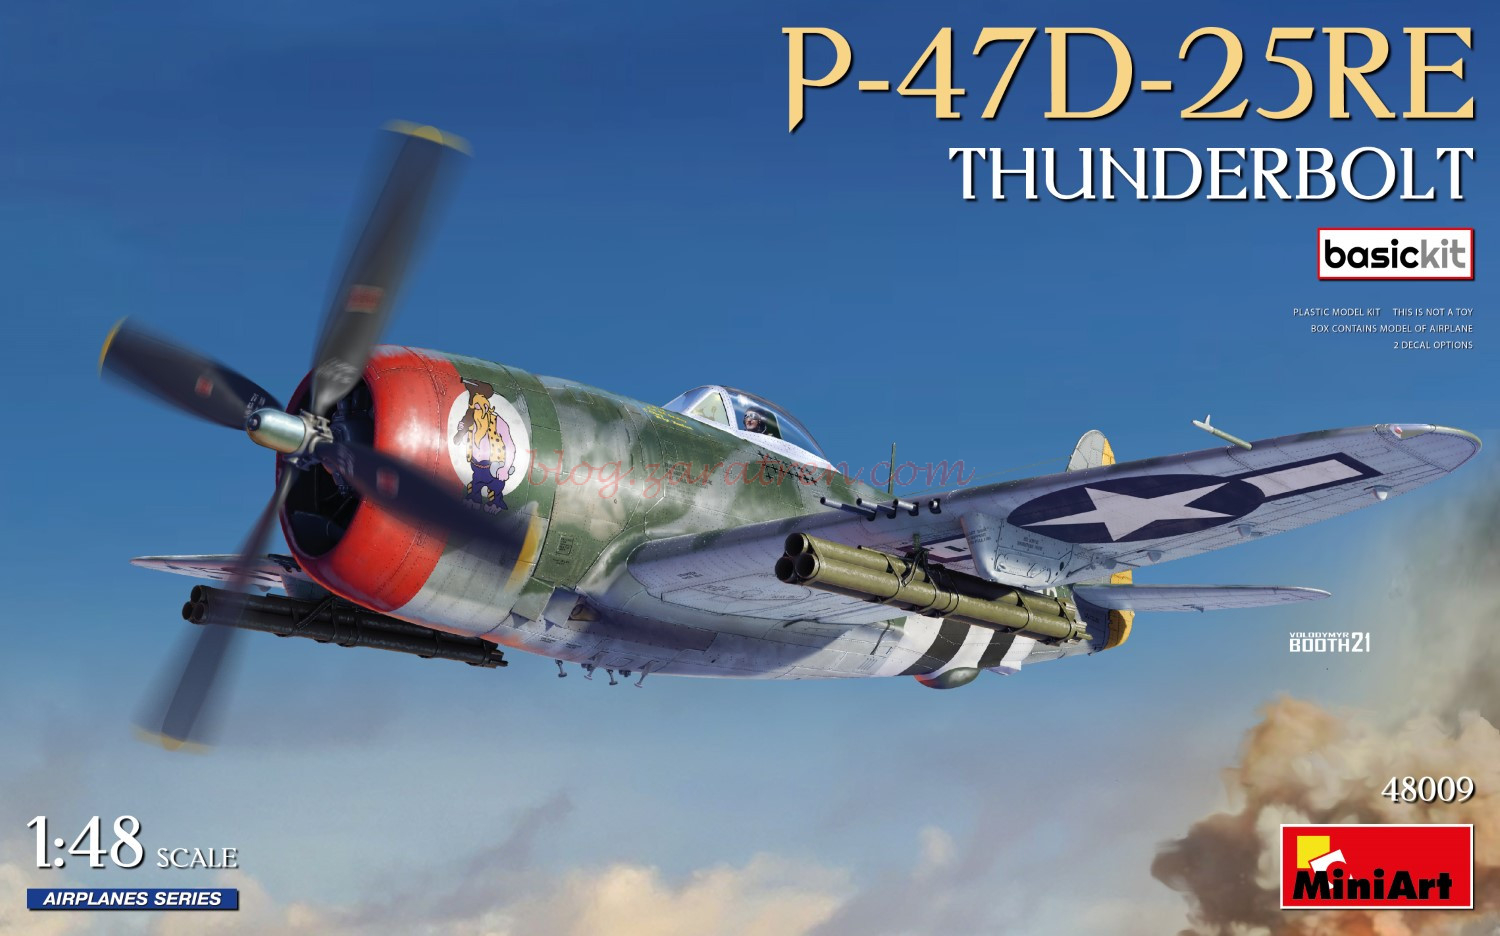 Miniart Models – Avión P-47D-25RE Thunderbolt, Escala 1:48, Ref: 48009